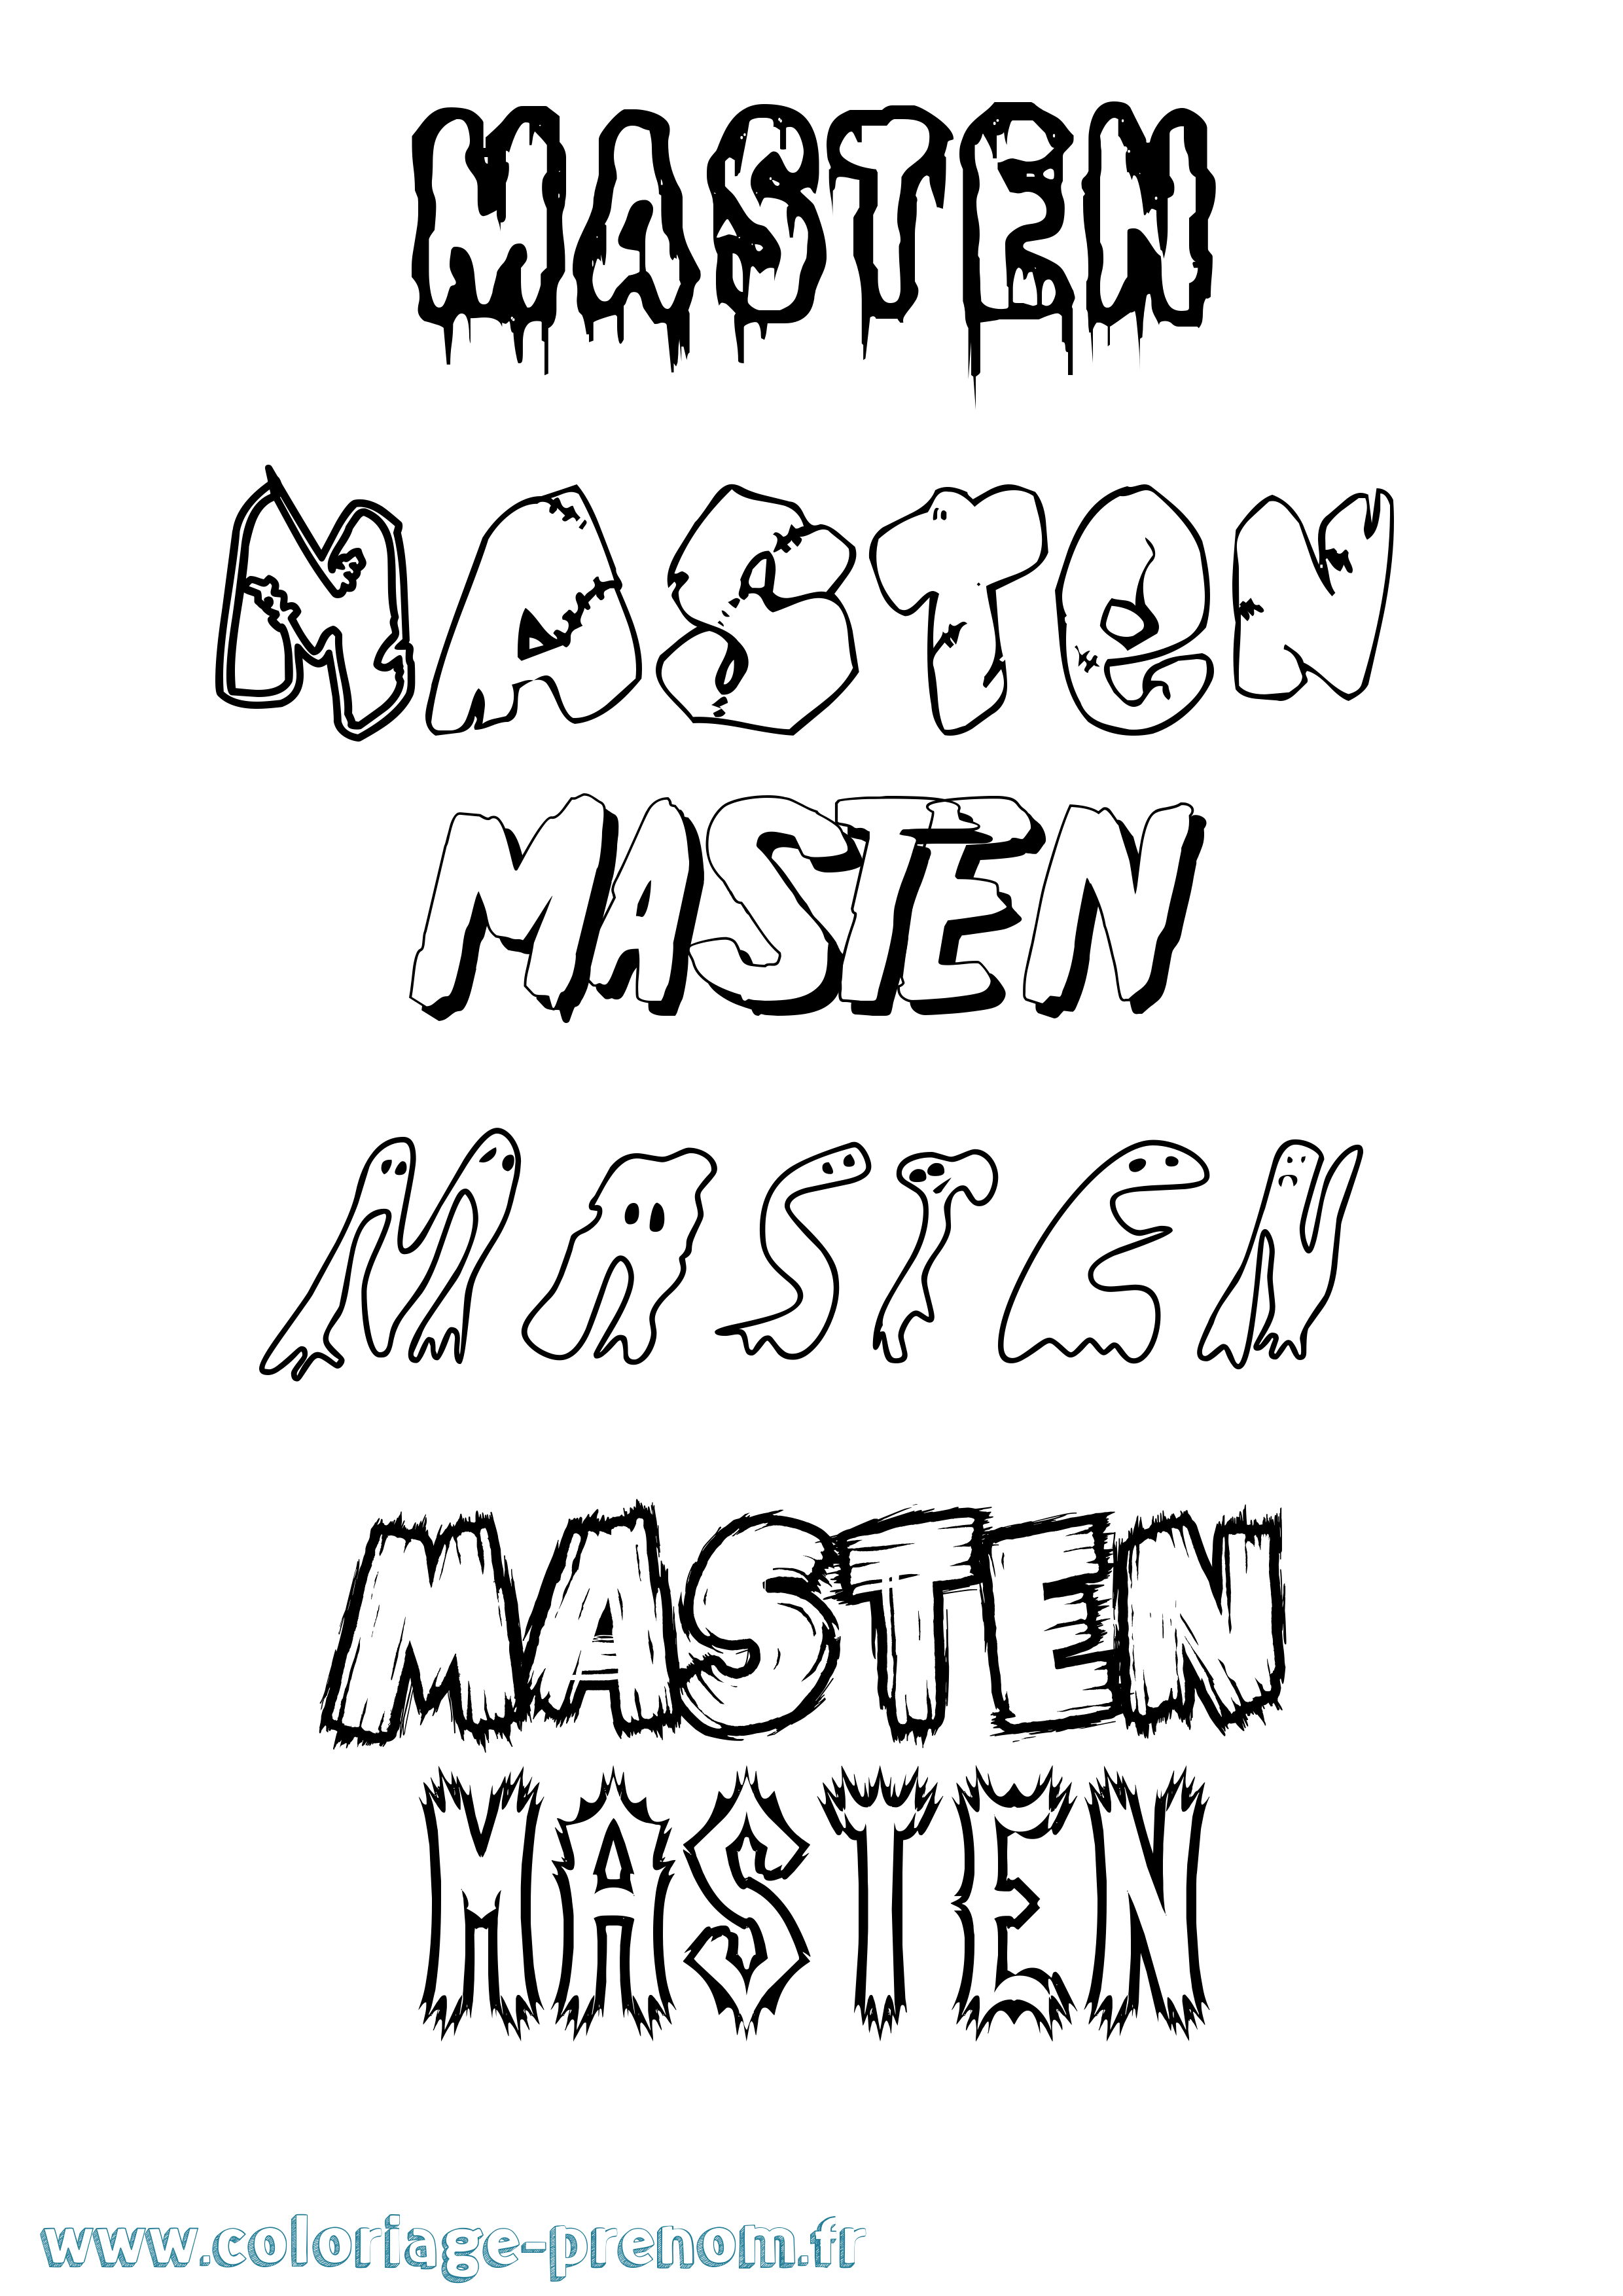 Coloriage prénom Masten Frisson